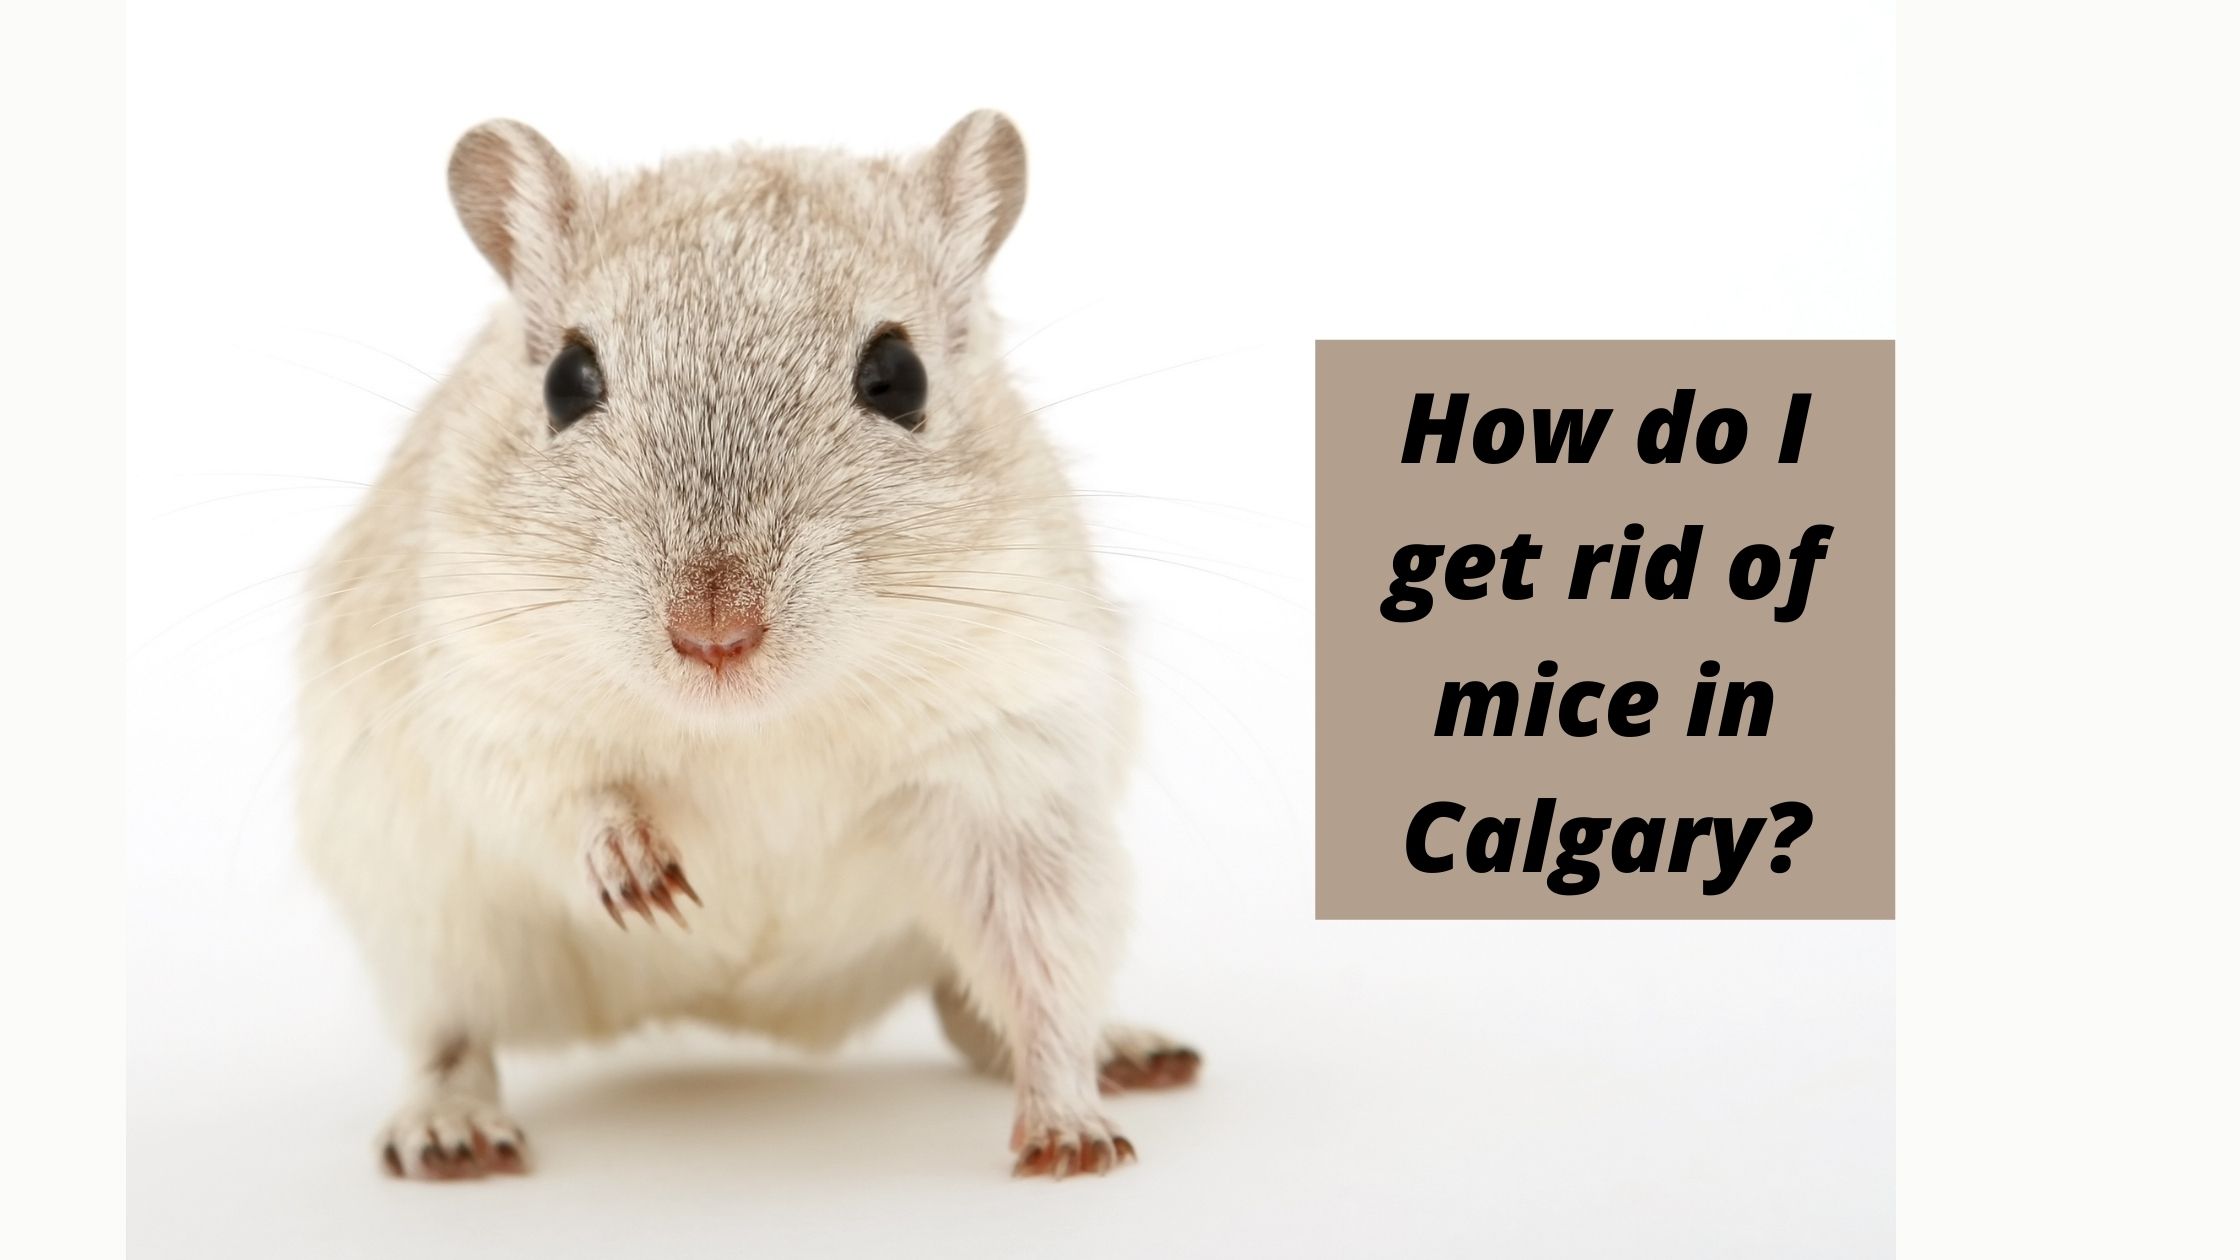 How do I get rid of mice in Calgary